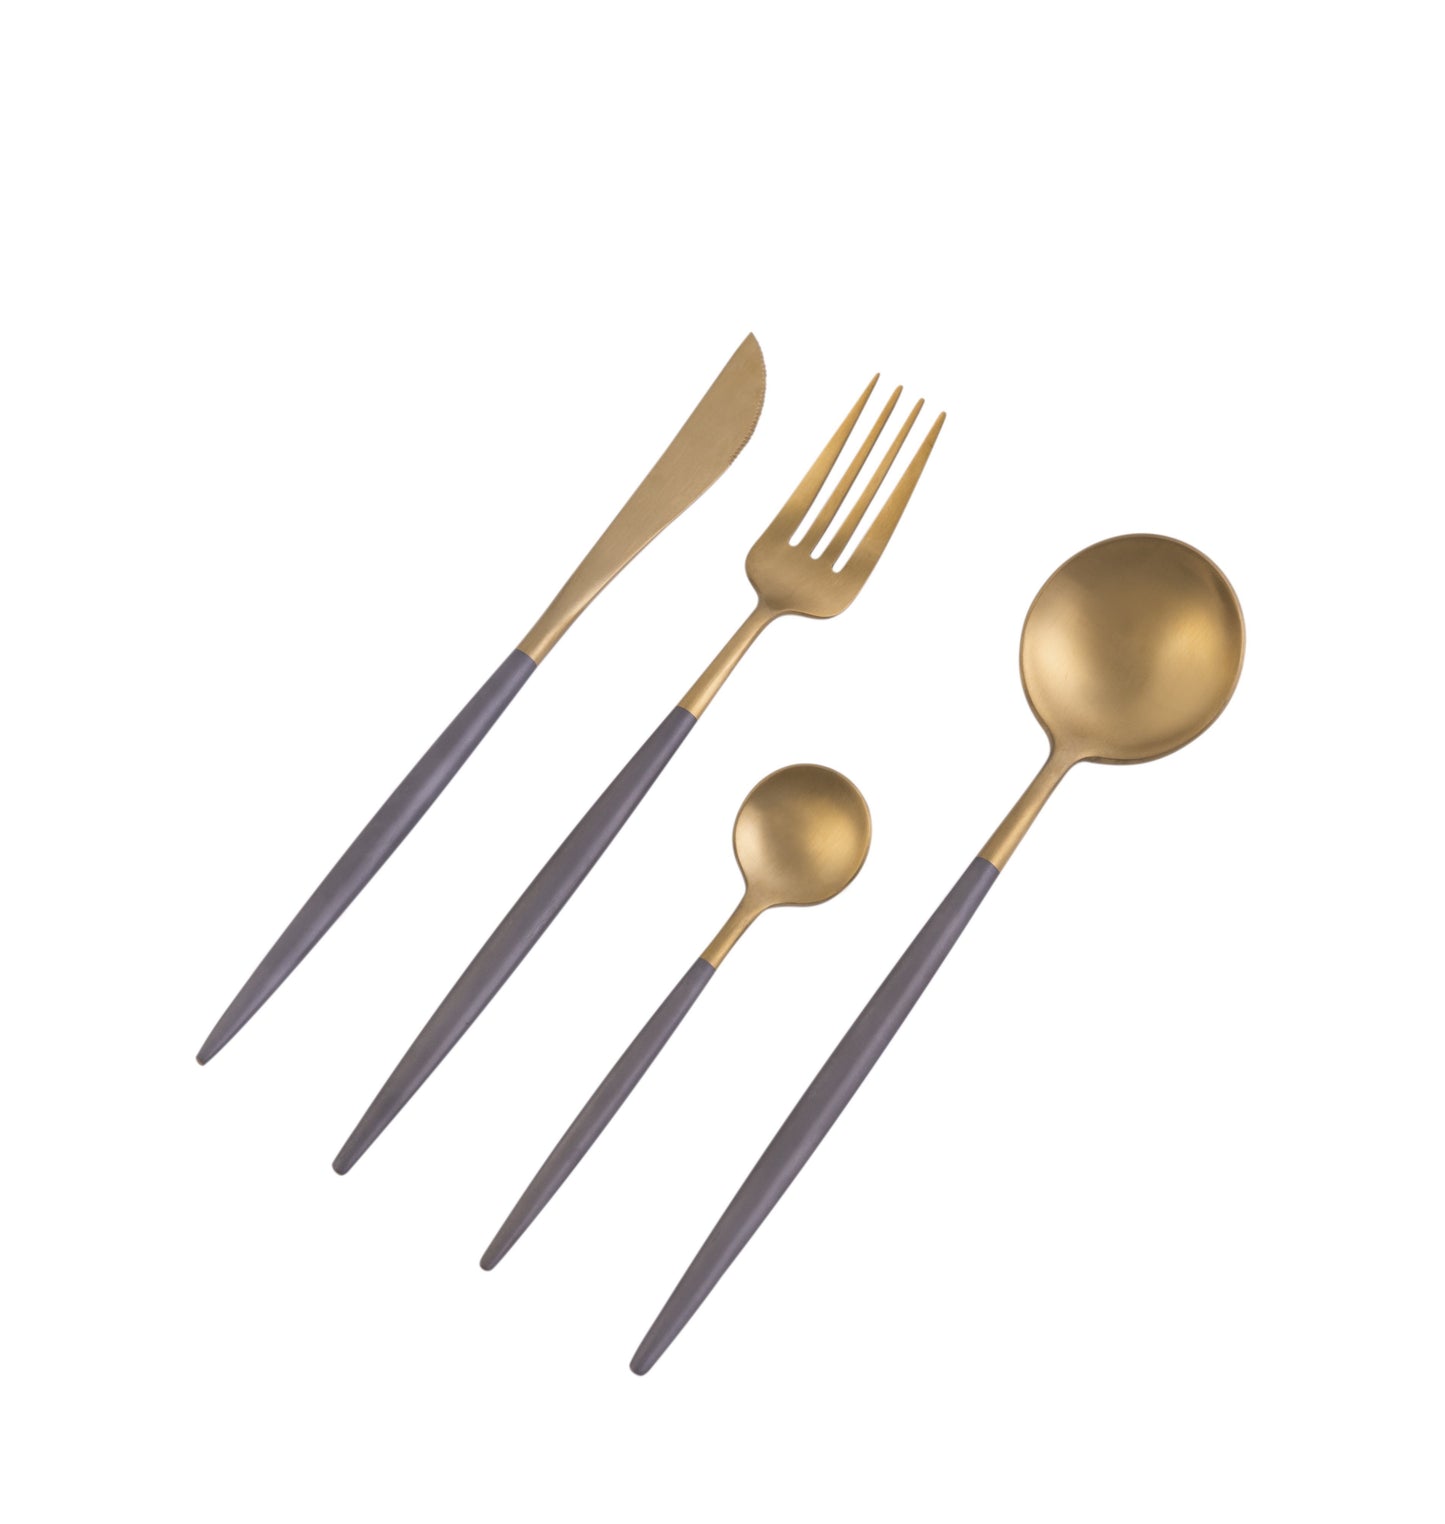 Dubai 16 Piece Cutlery Set - Gold and Grey